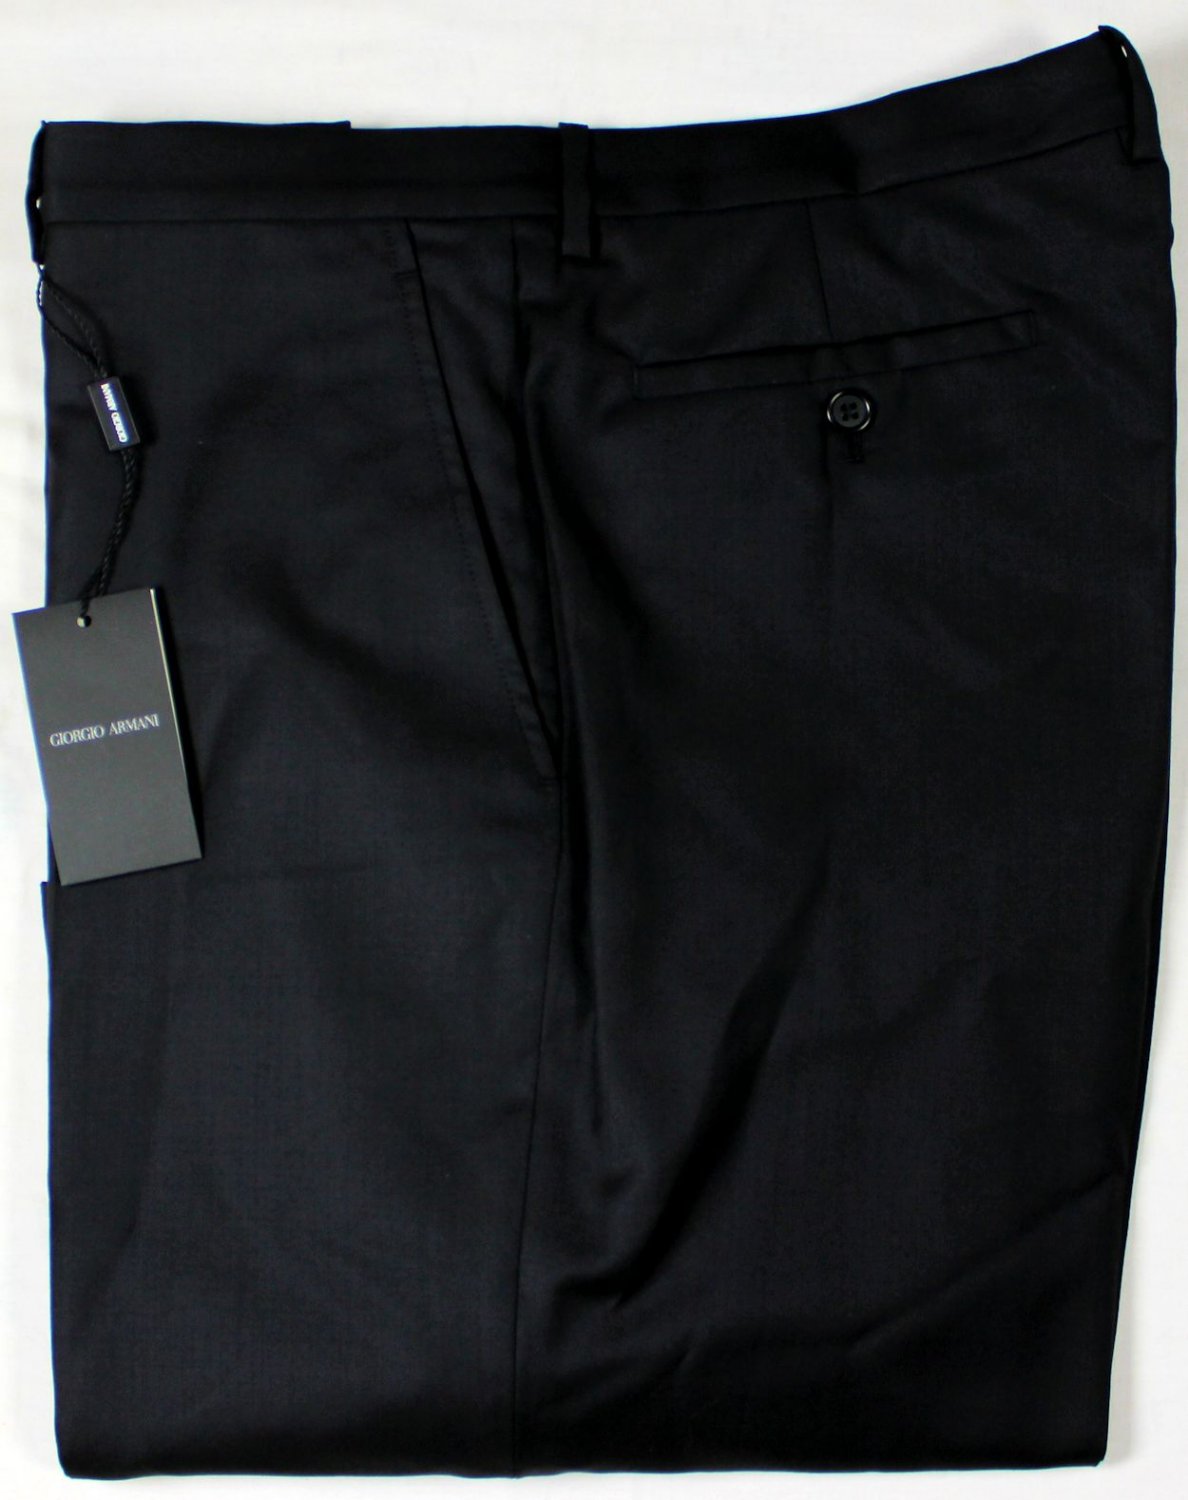 GIORGIO ARMANI PANTS $995 BLACK BLACK LABEL WOOL/CASHMERE DRESS SLACKS ...